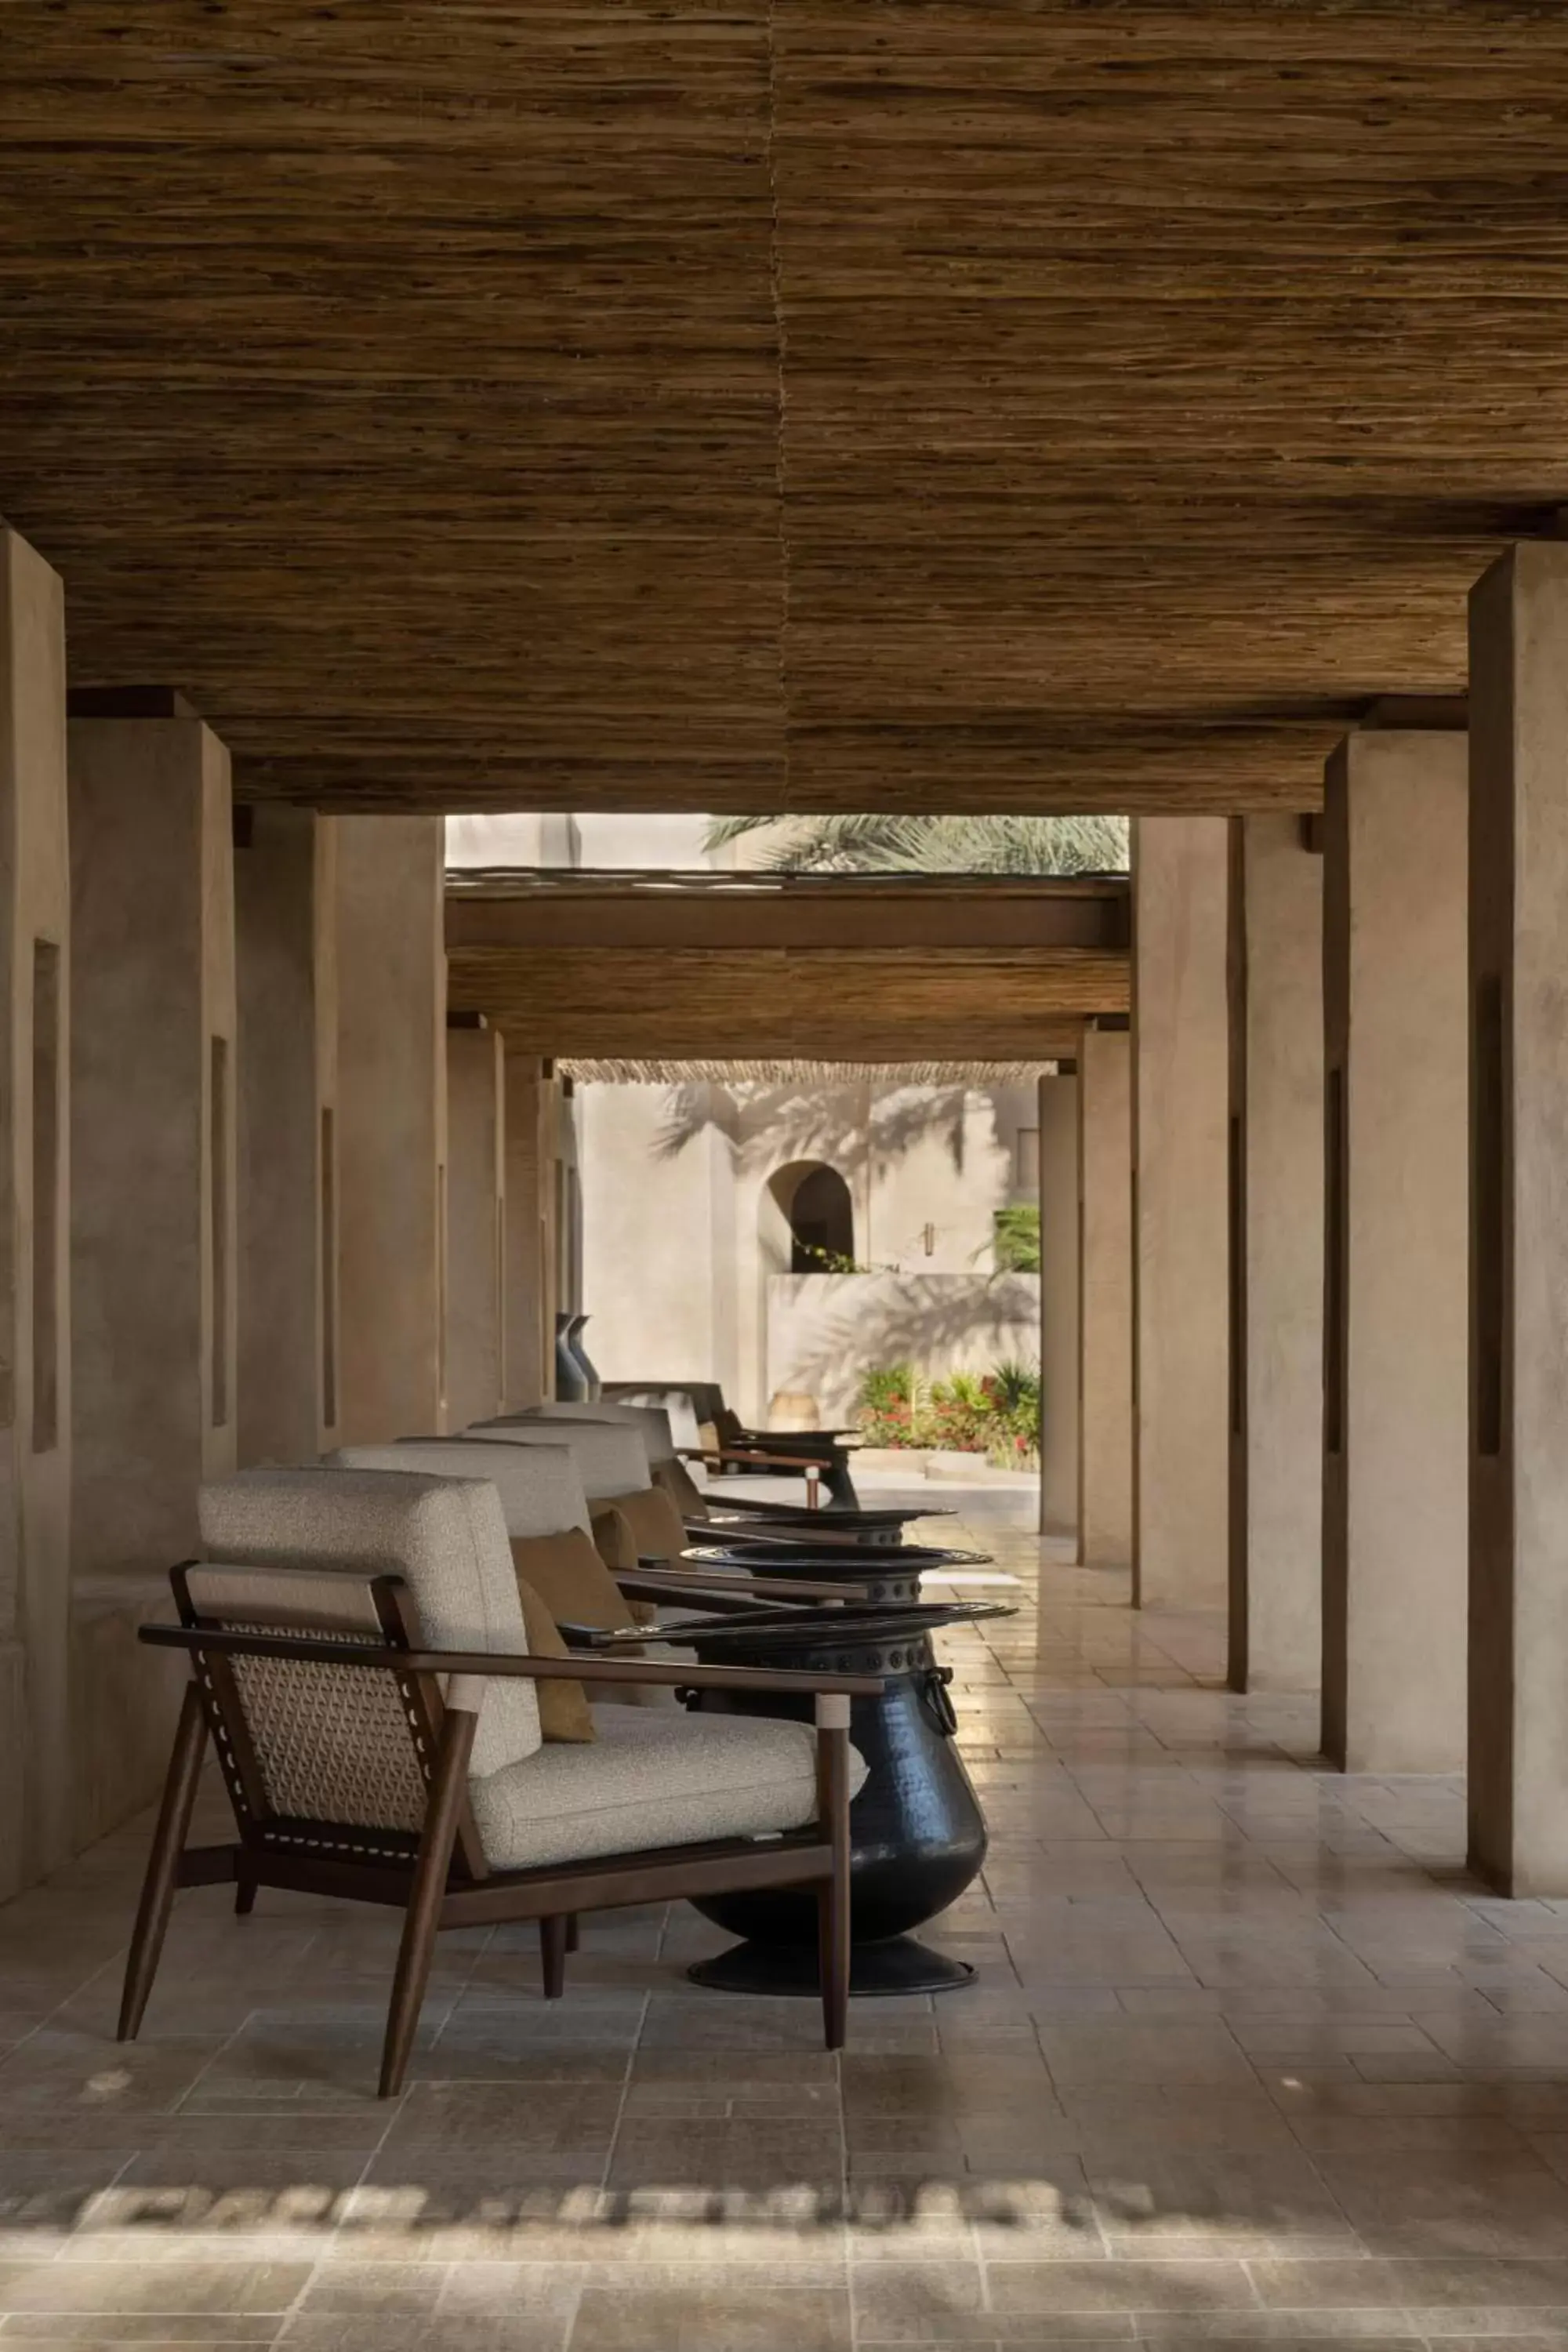 Property building in Bab Al Shams, A Rare Finds Desert Resort, Dubai